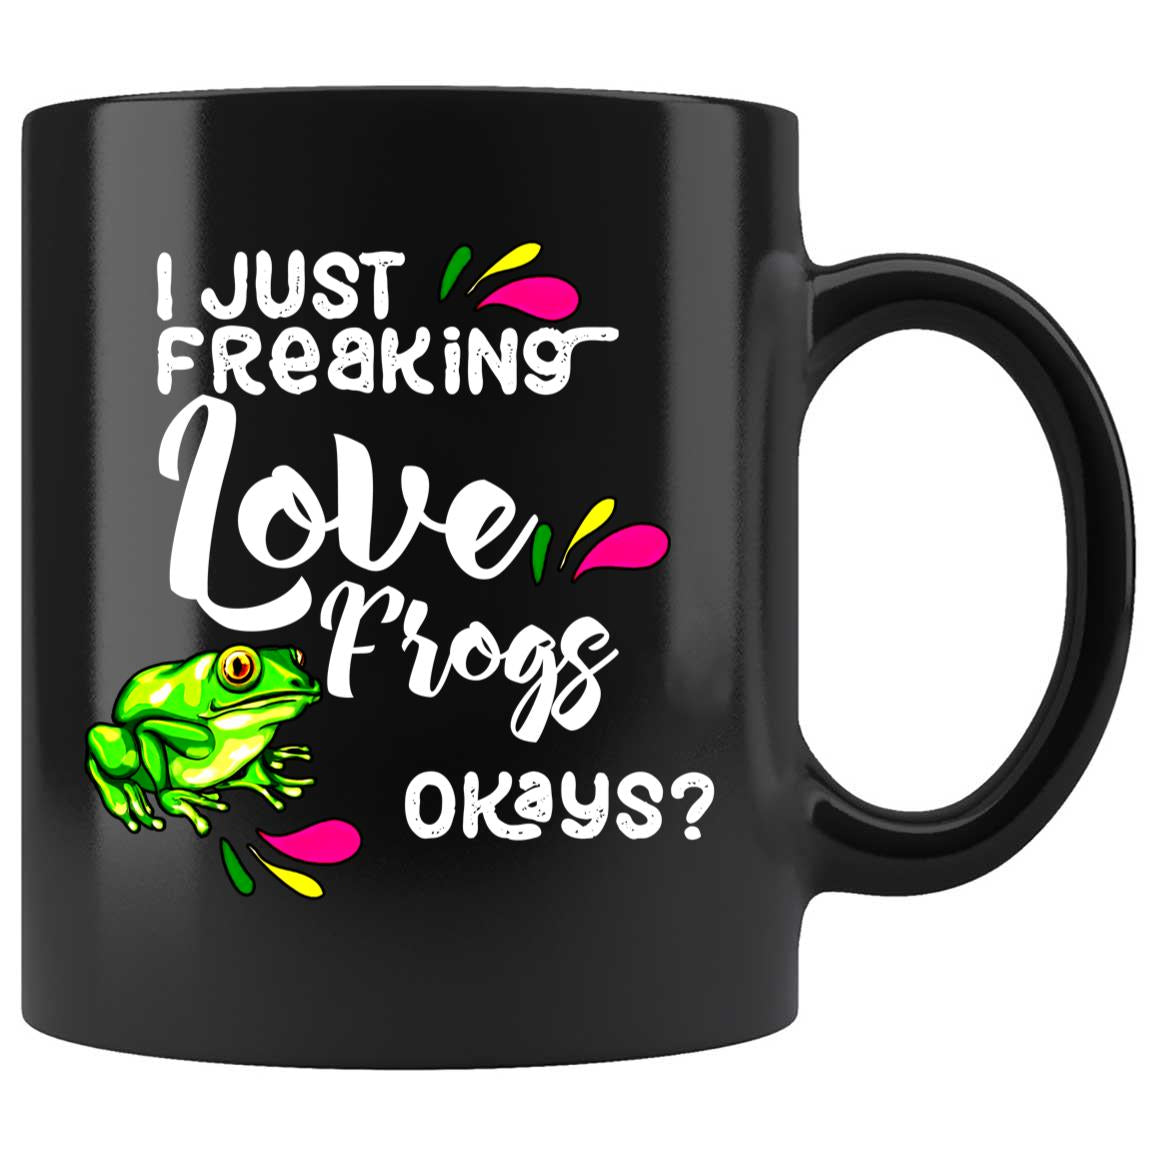 Skitongifts Coffee Mug Funny Ceramic Novelty I Just Freaking Love Frogs, Ok I2Wai2Q